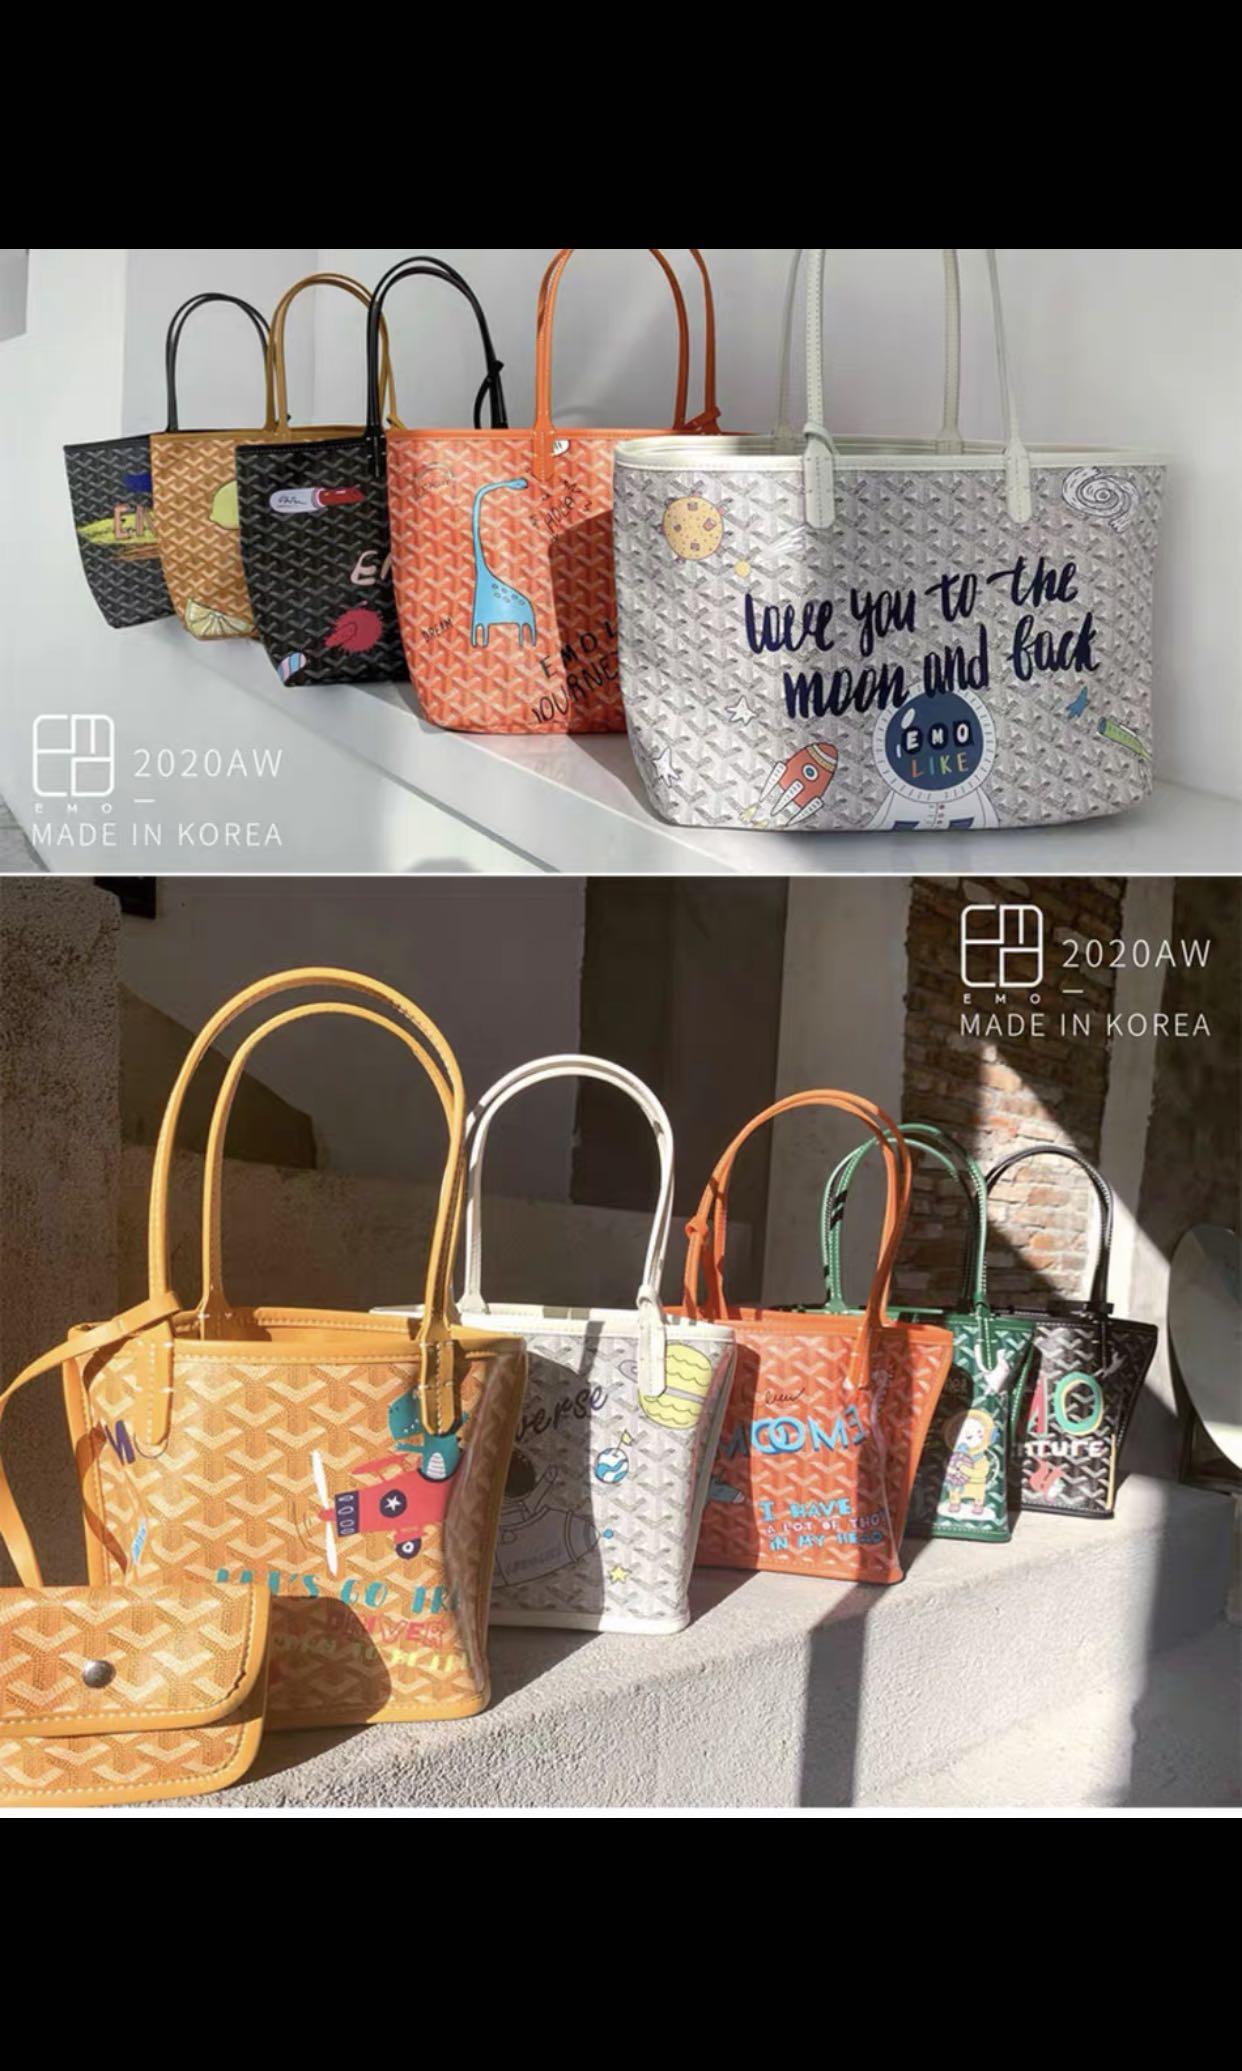 Emo Goyard Print Tote Bag Fall Winter Limited Edition Women S Fashion Bags Wallets Handbags On Carousell